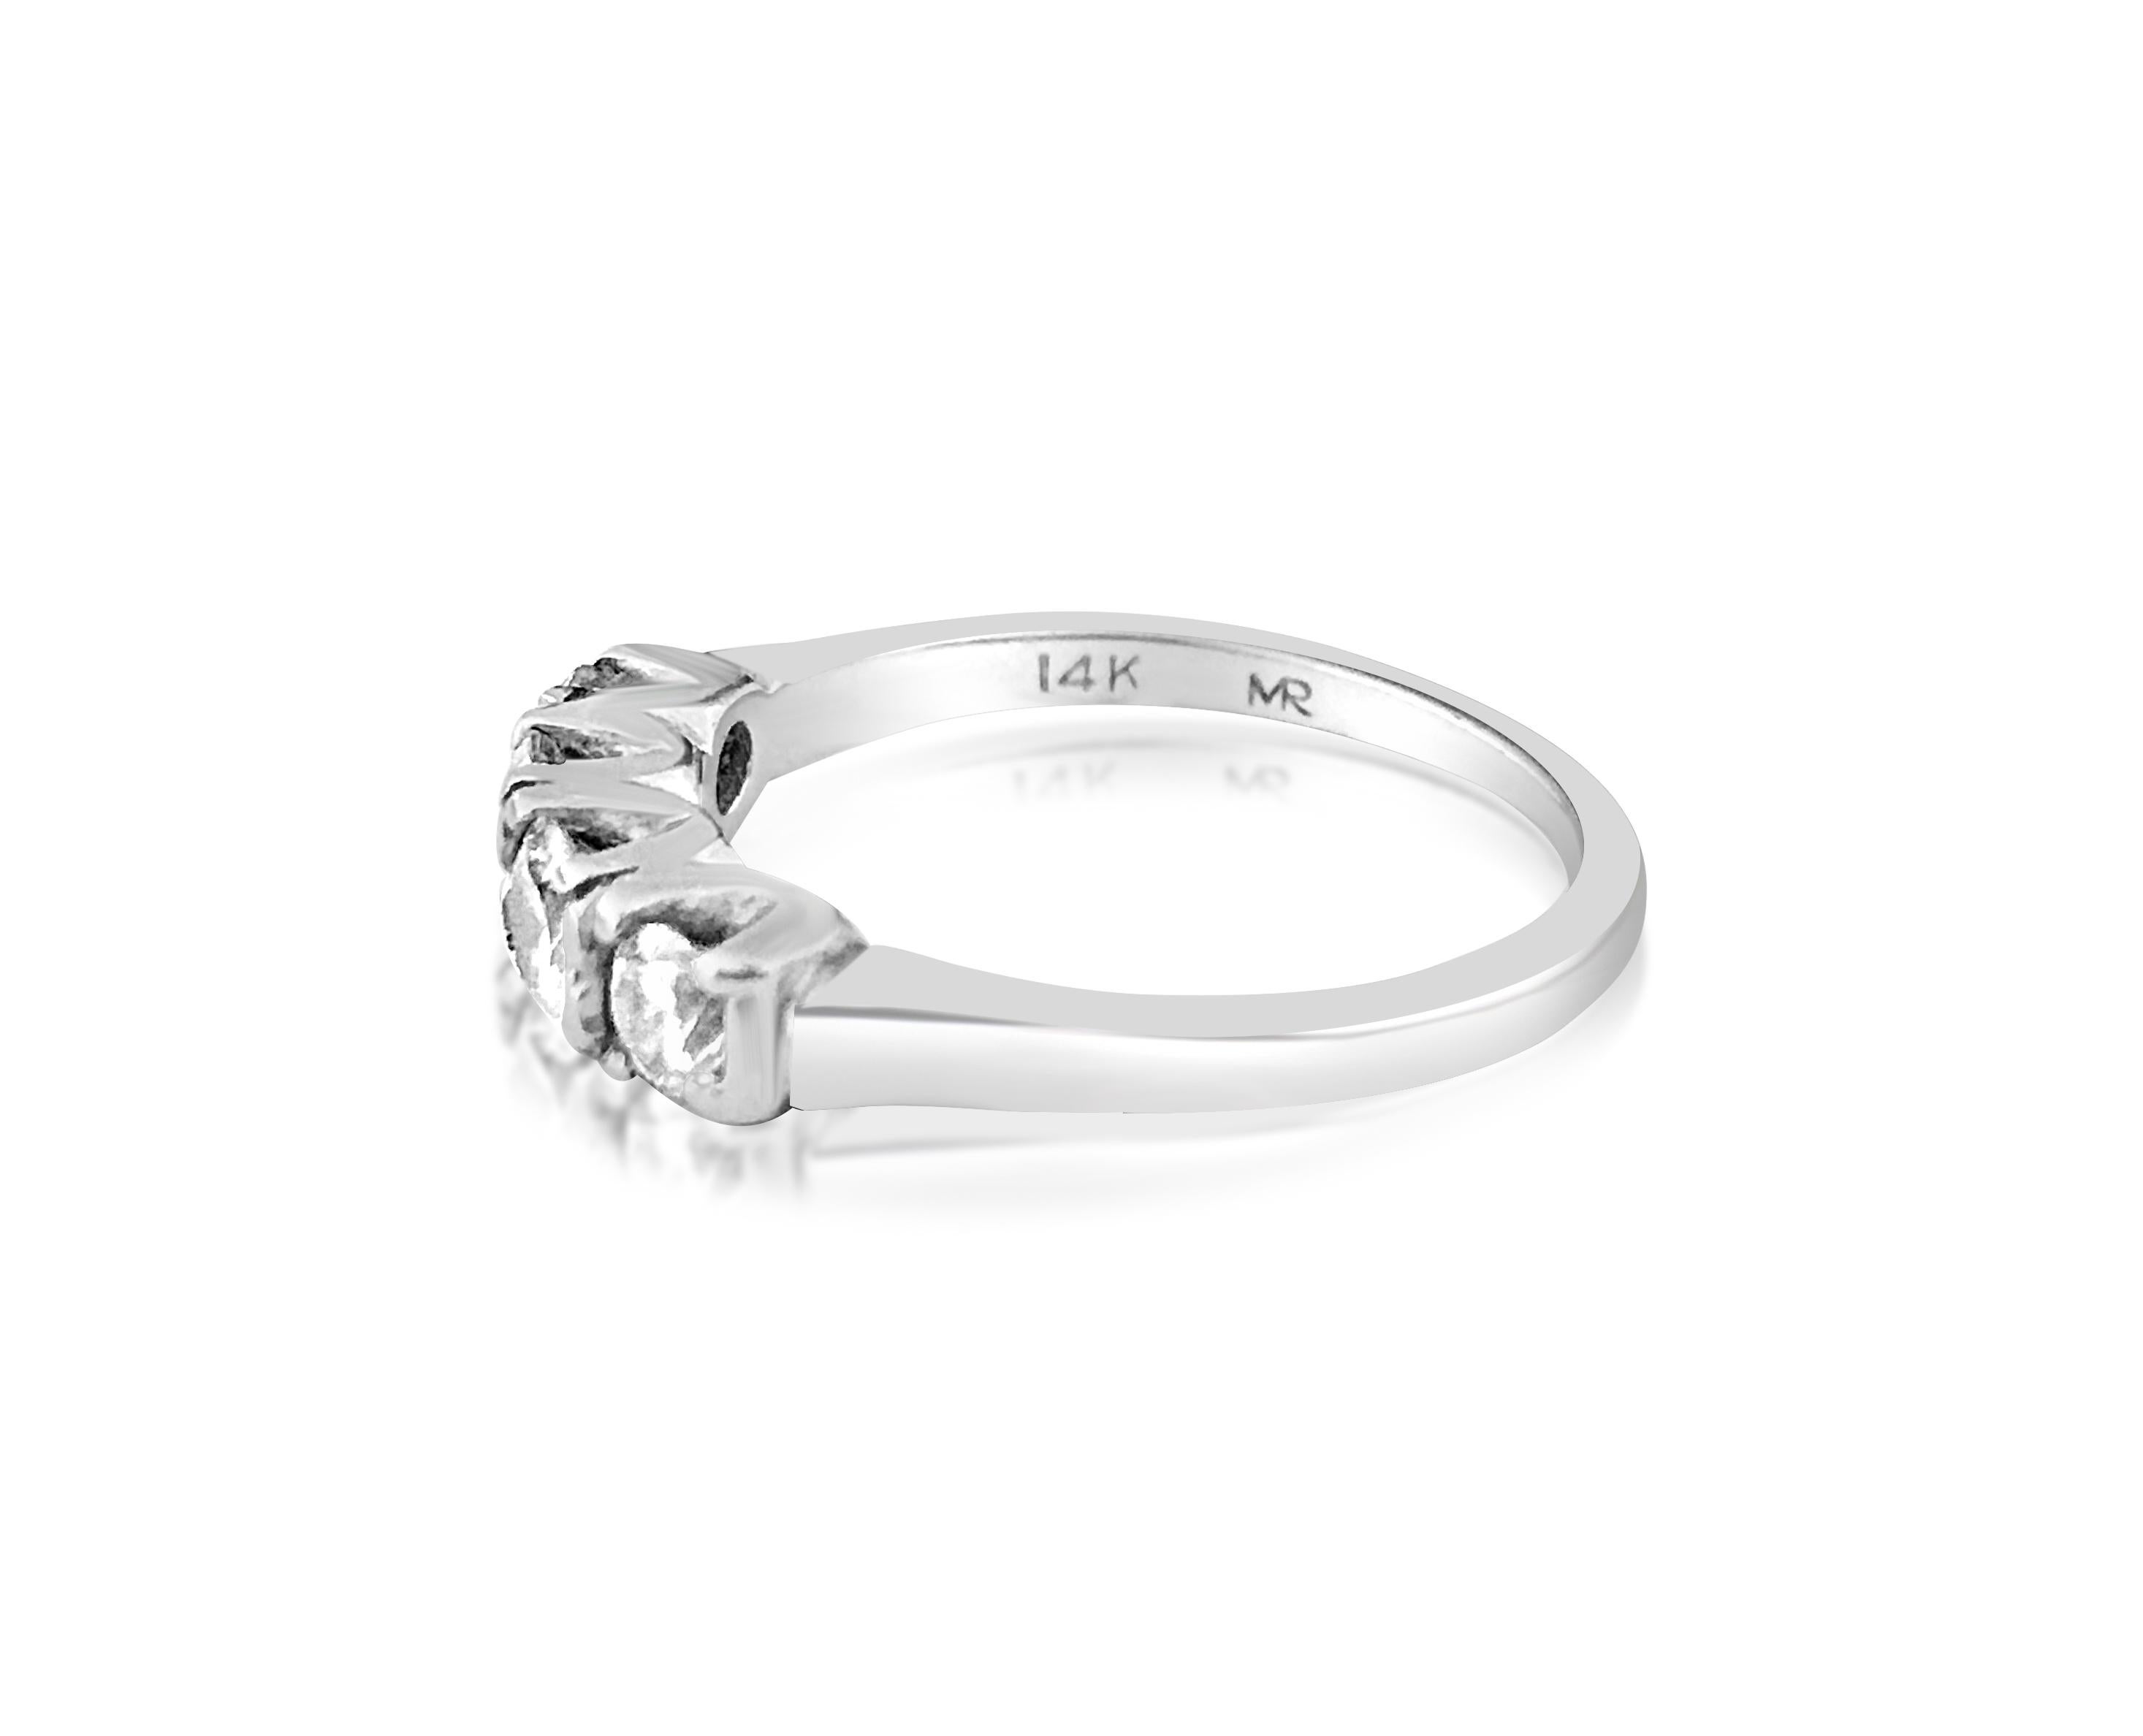 1.00 carat diamond ring